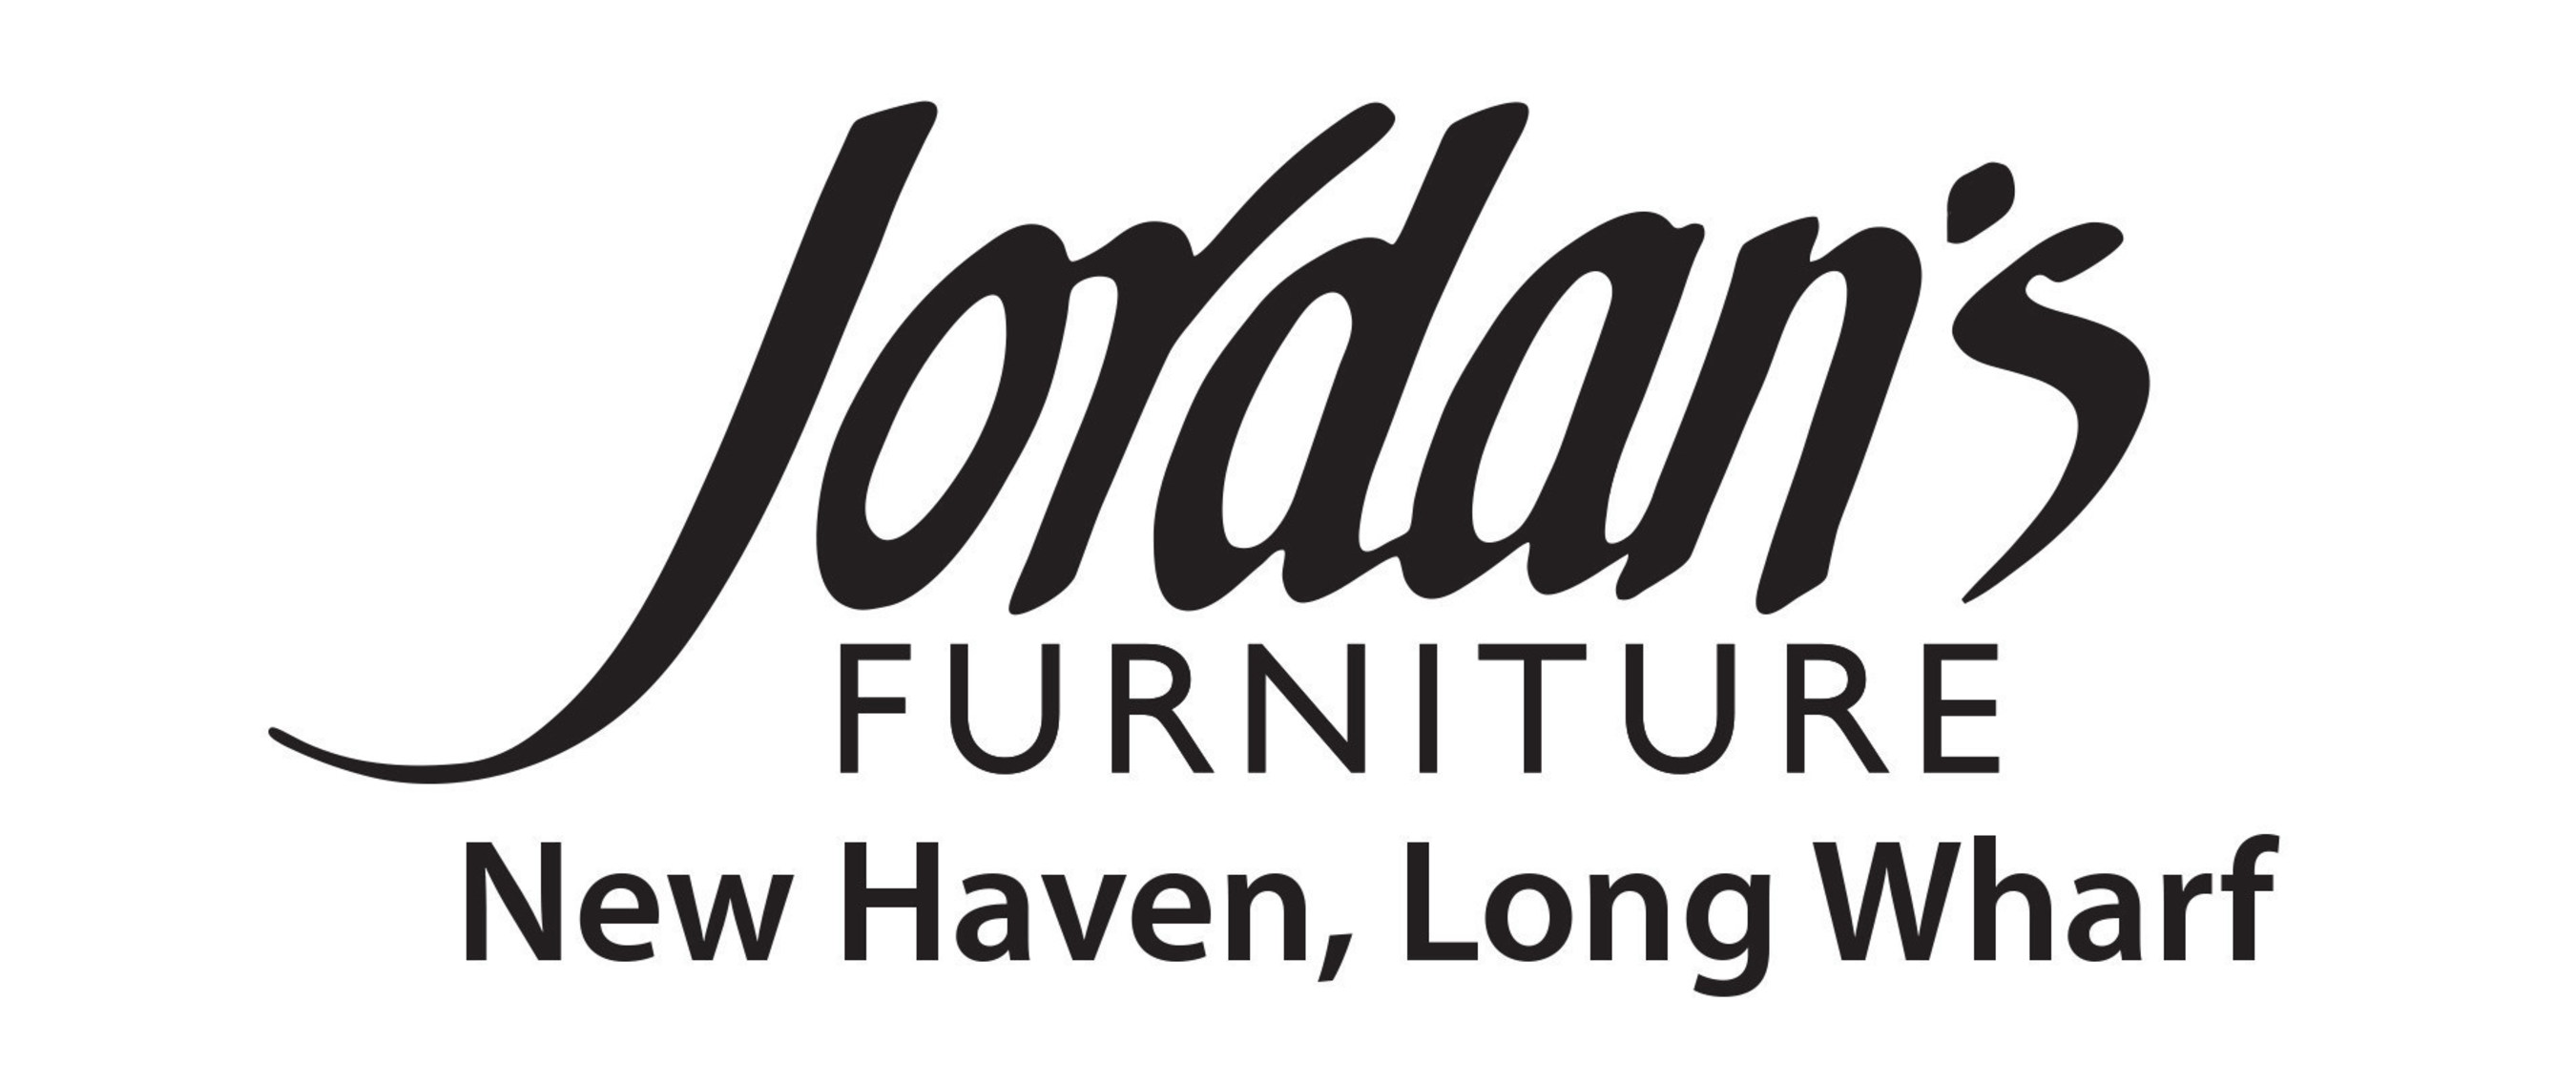 Jordan S Furniture Announces New Haven Store Ribbon Cutting